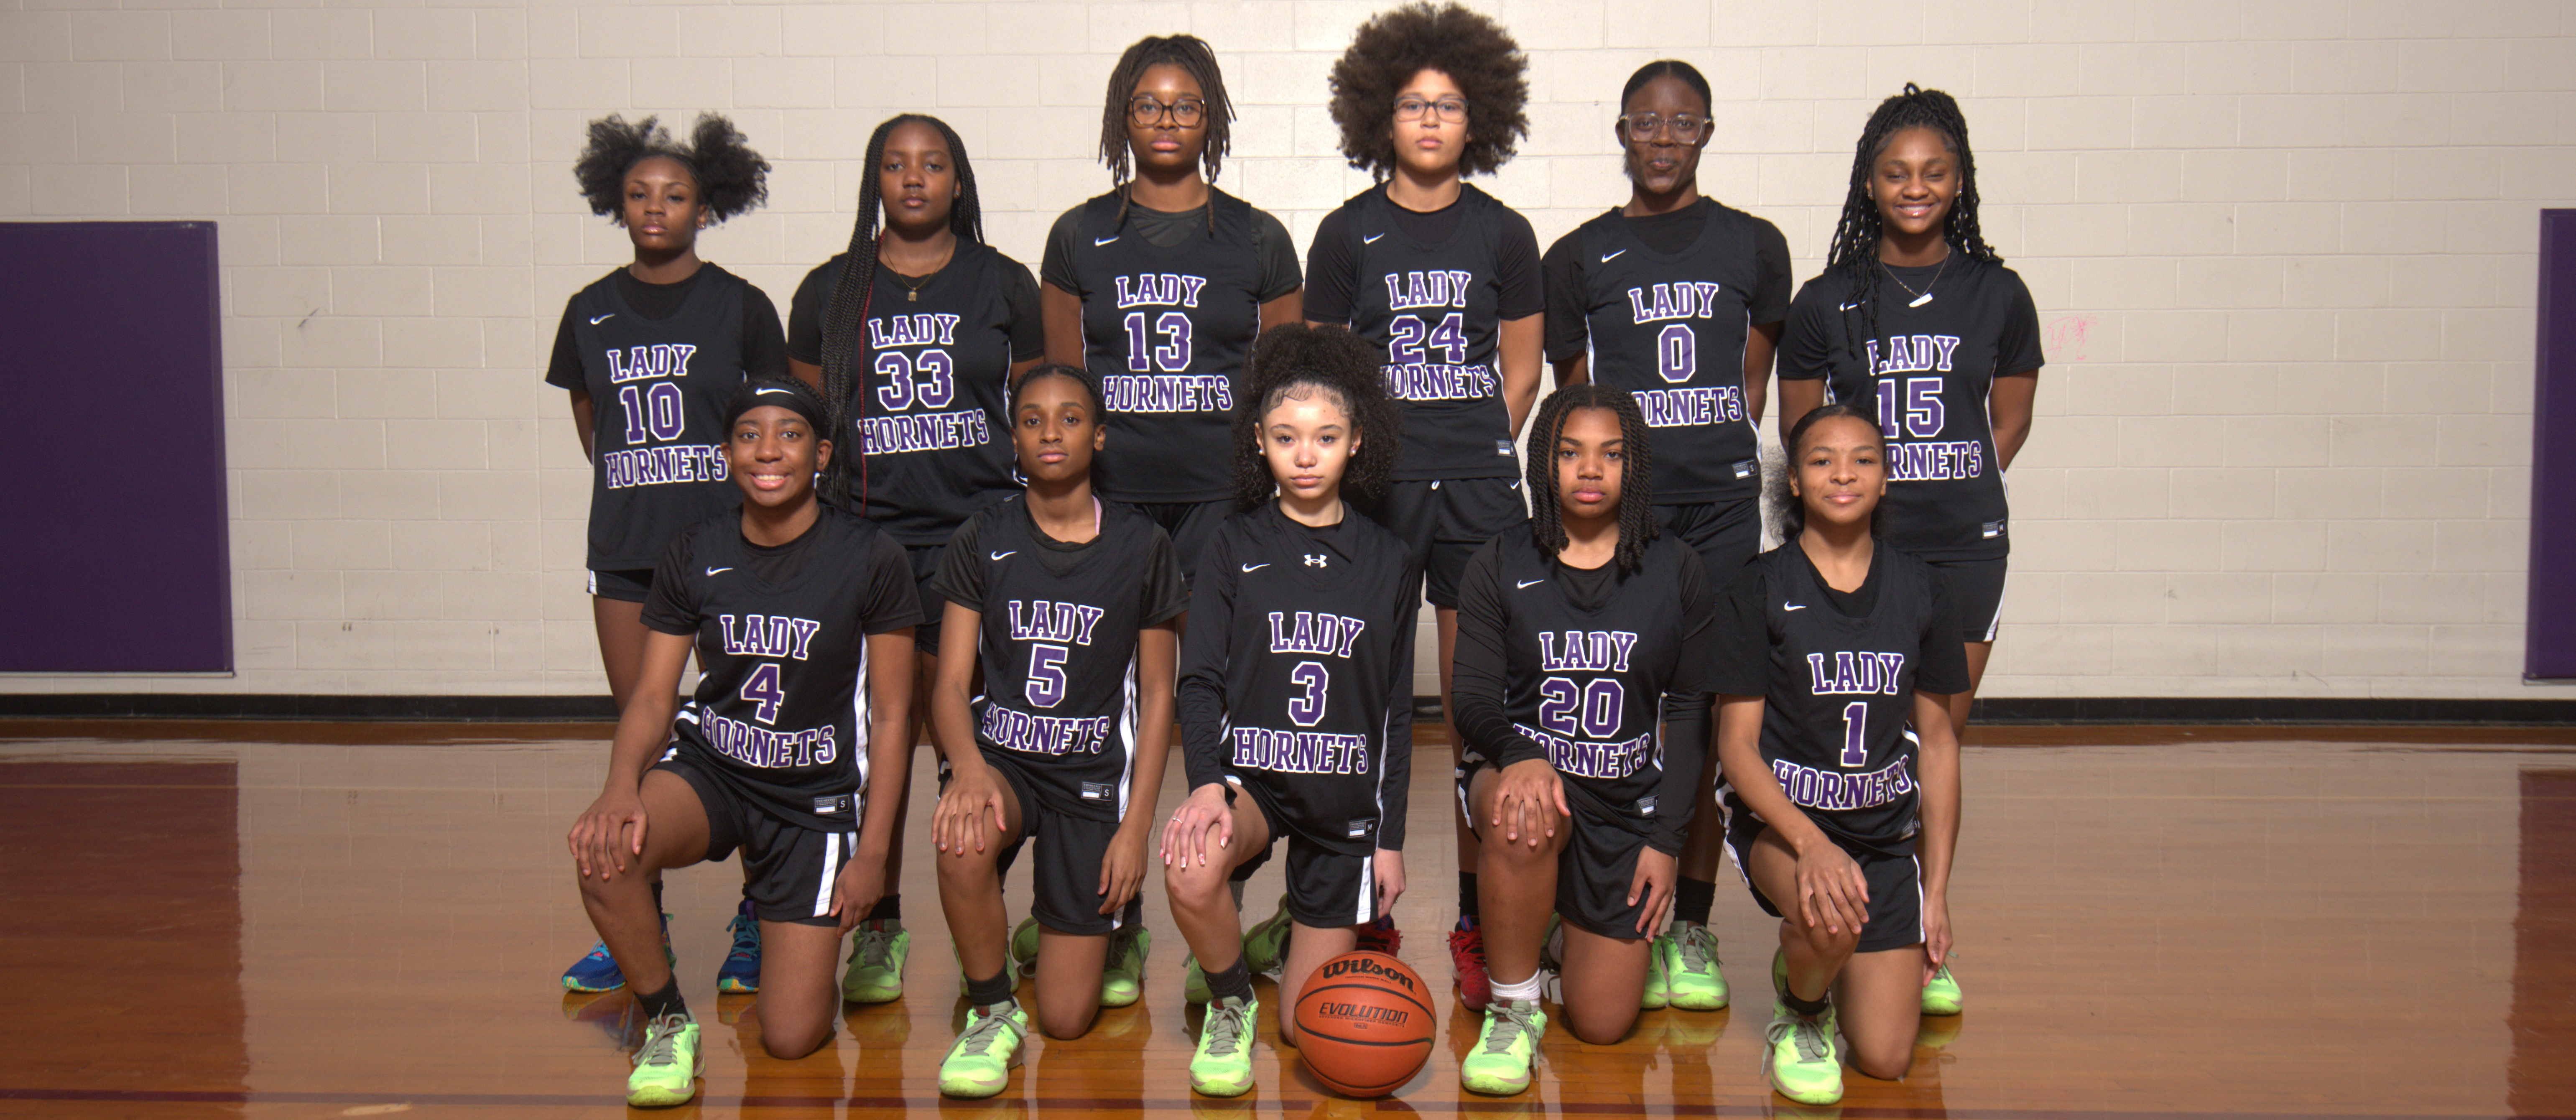 DCHS Lady Hornets Basketball Team